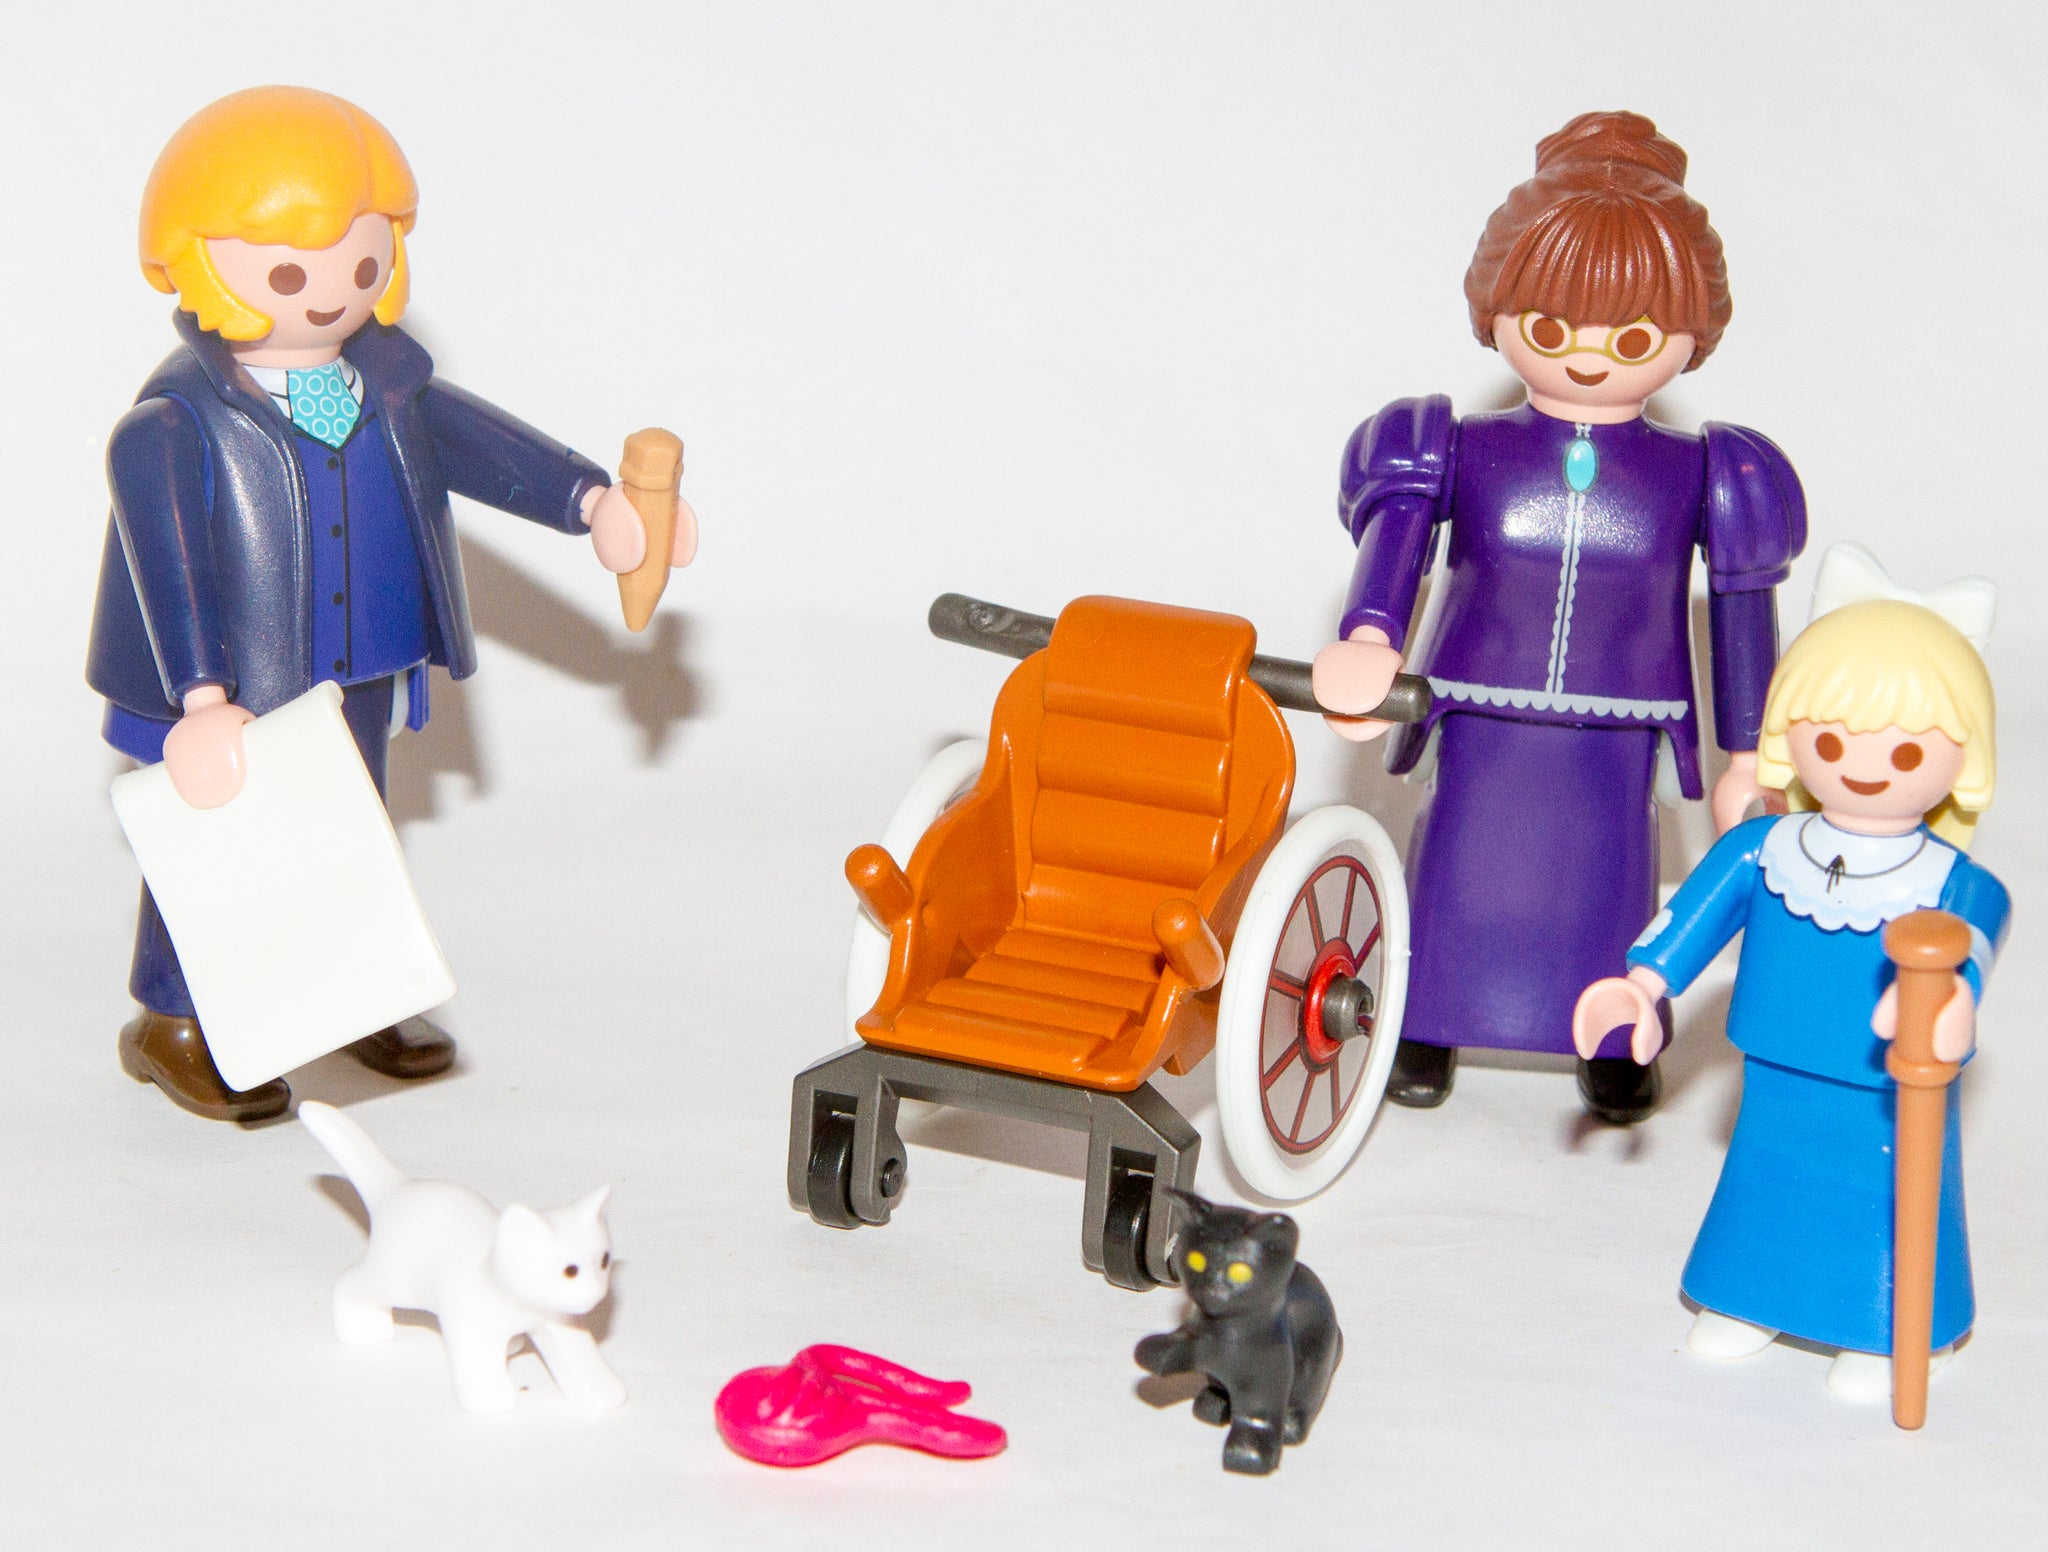 Playmobil Heidi: Clara, Padre y Srta Rottenmeier